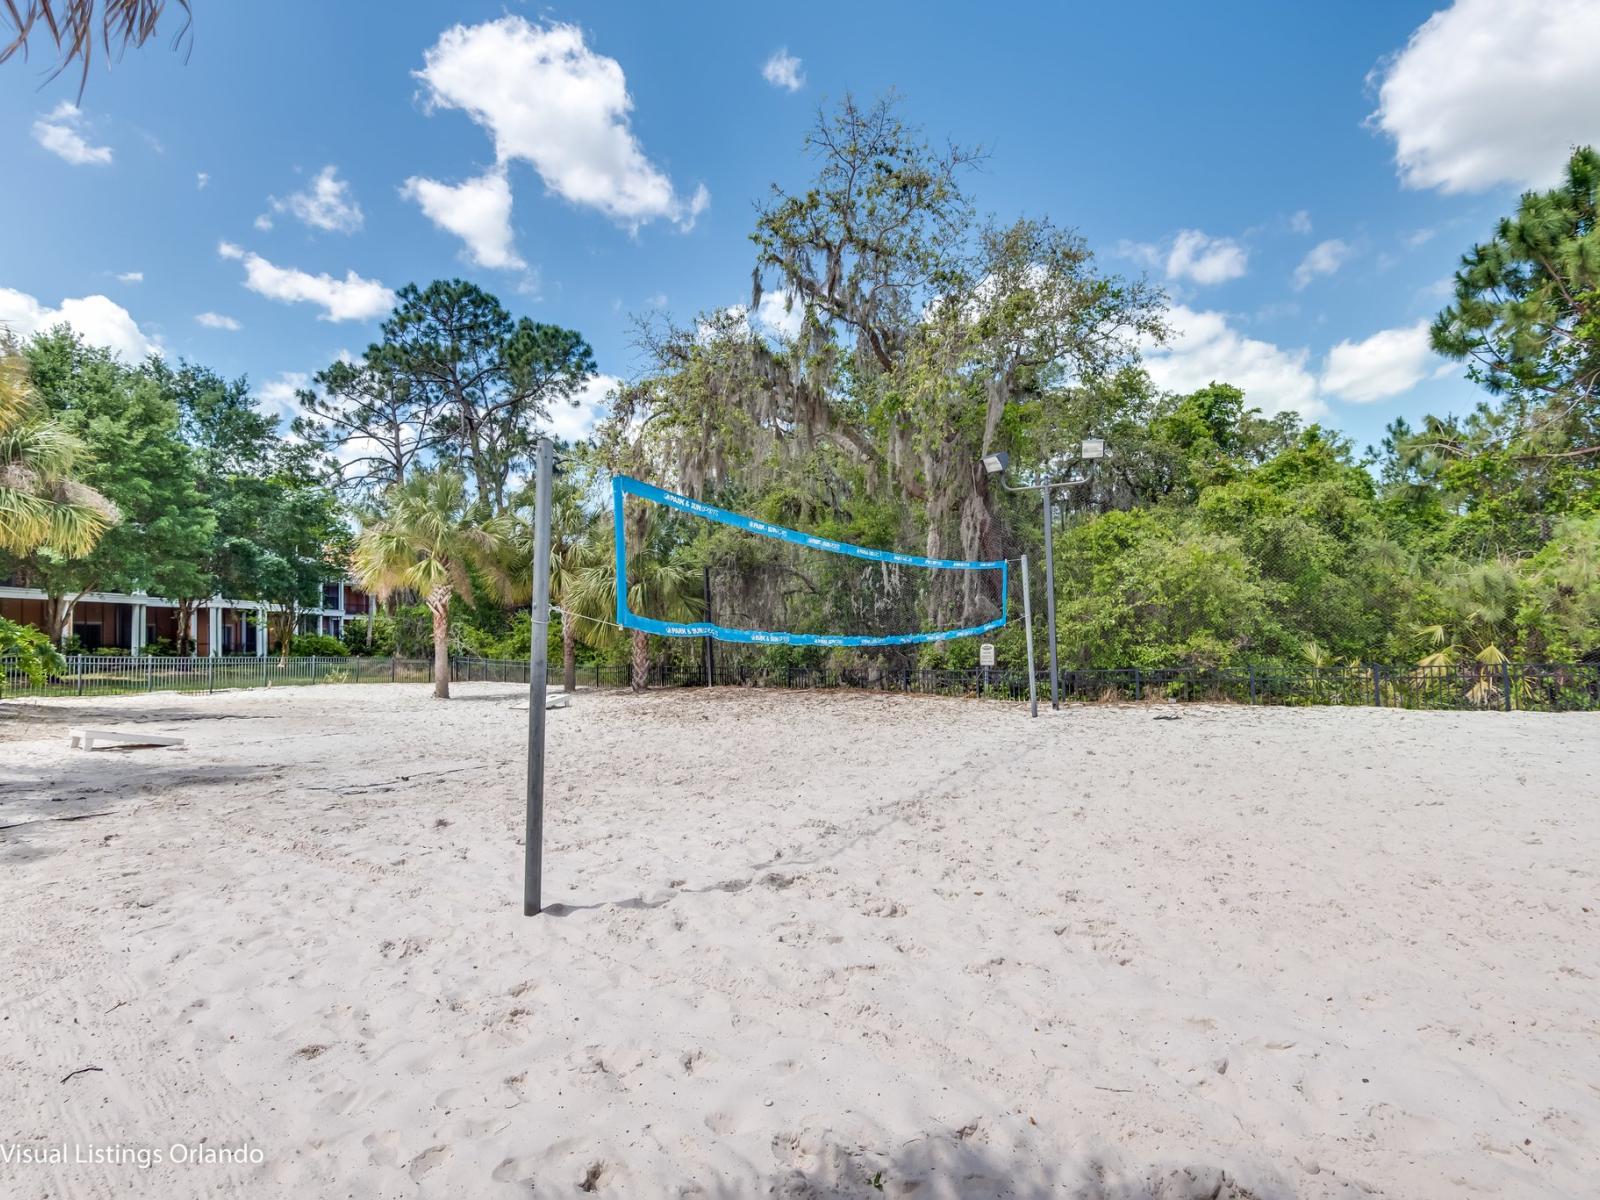 Bahama Bay sand volleyball